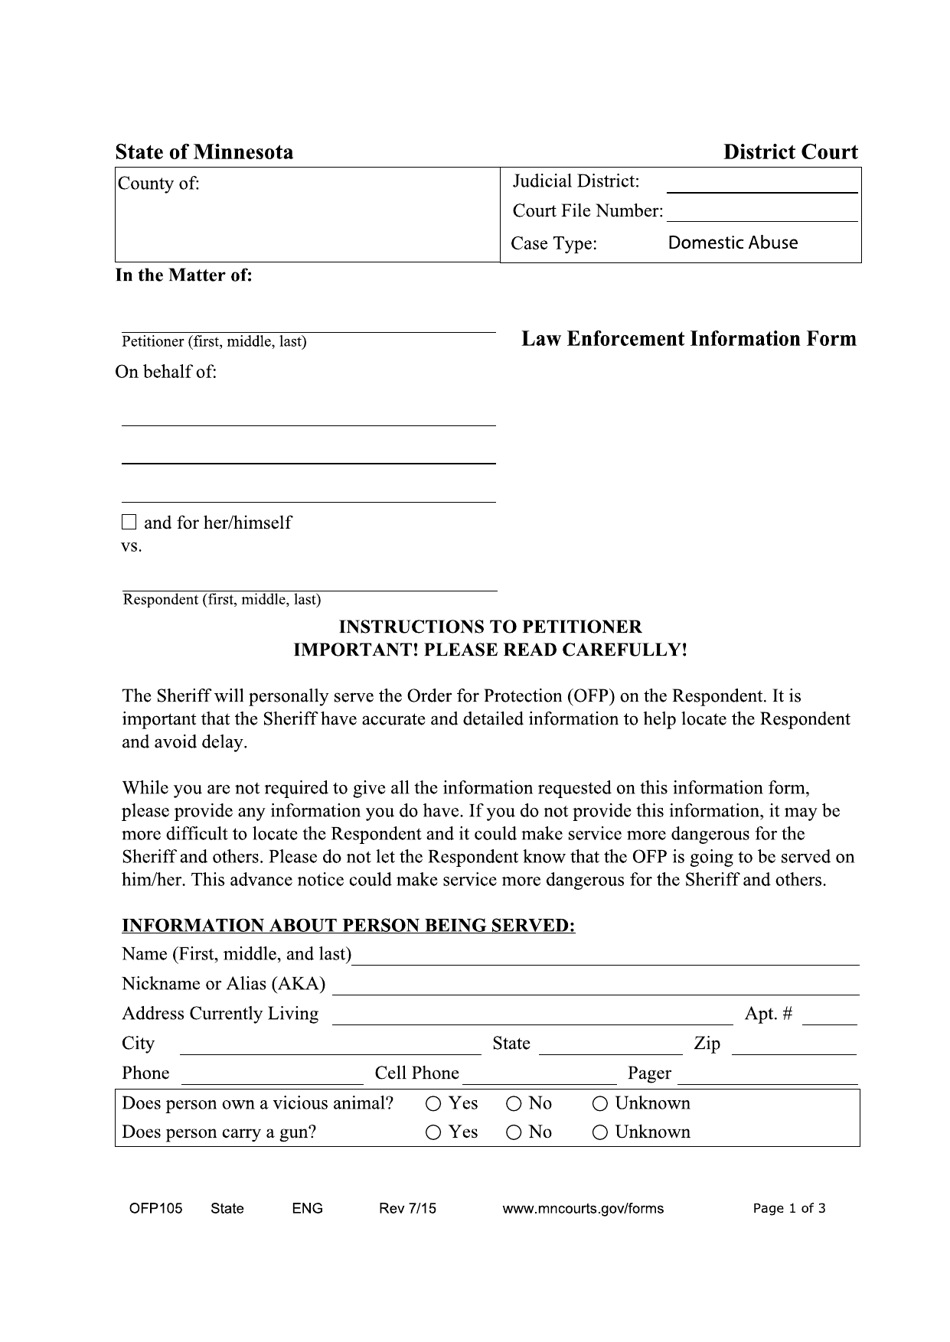 Form OFP105 Law Enforcement Information Form - Minnesota, Page 1